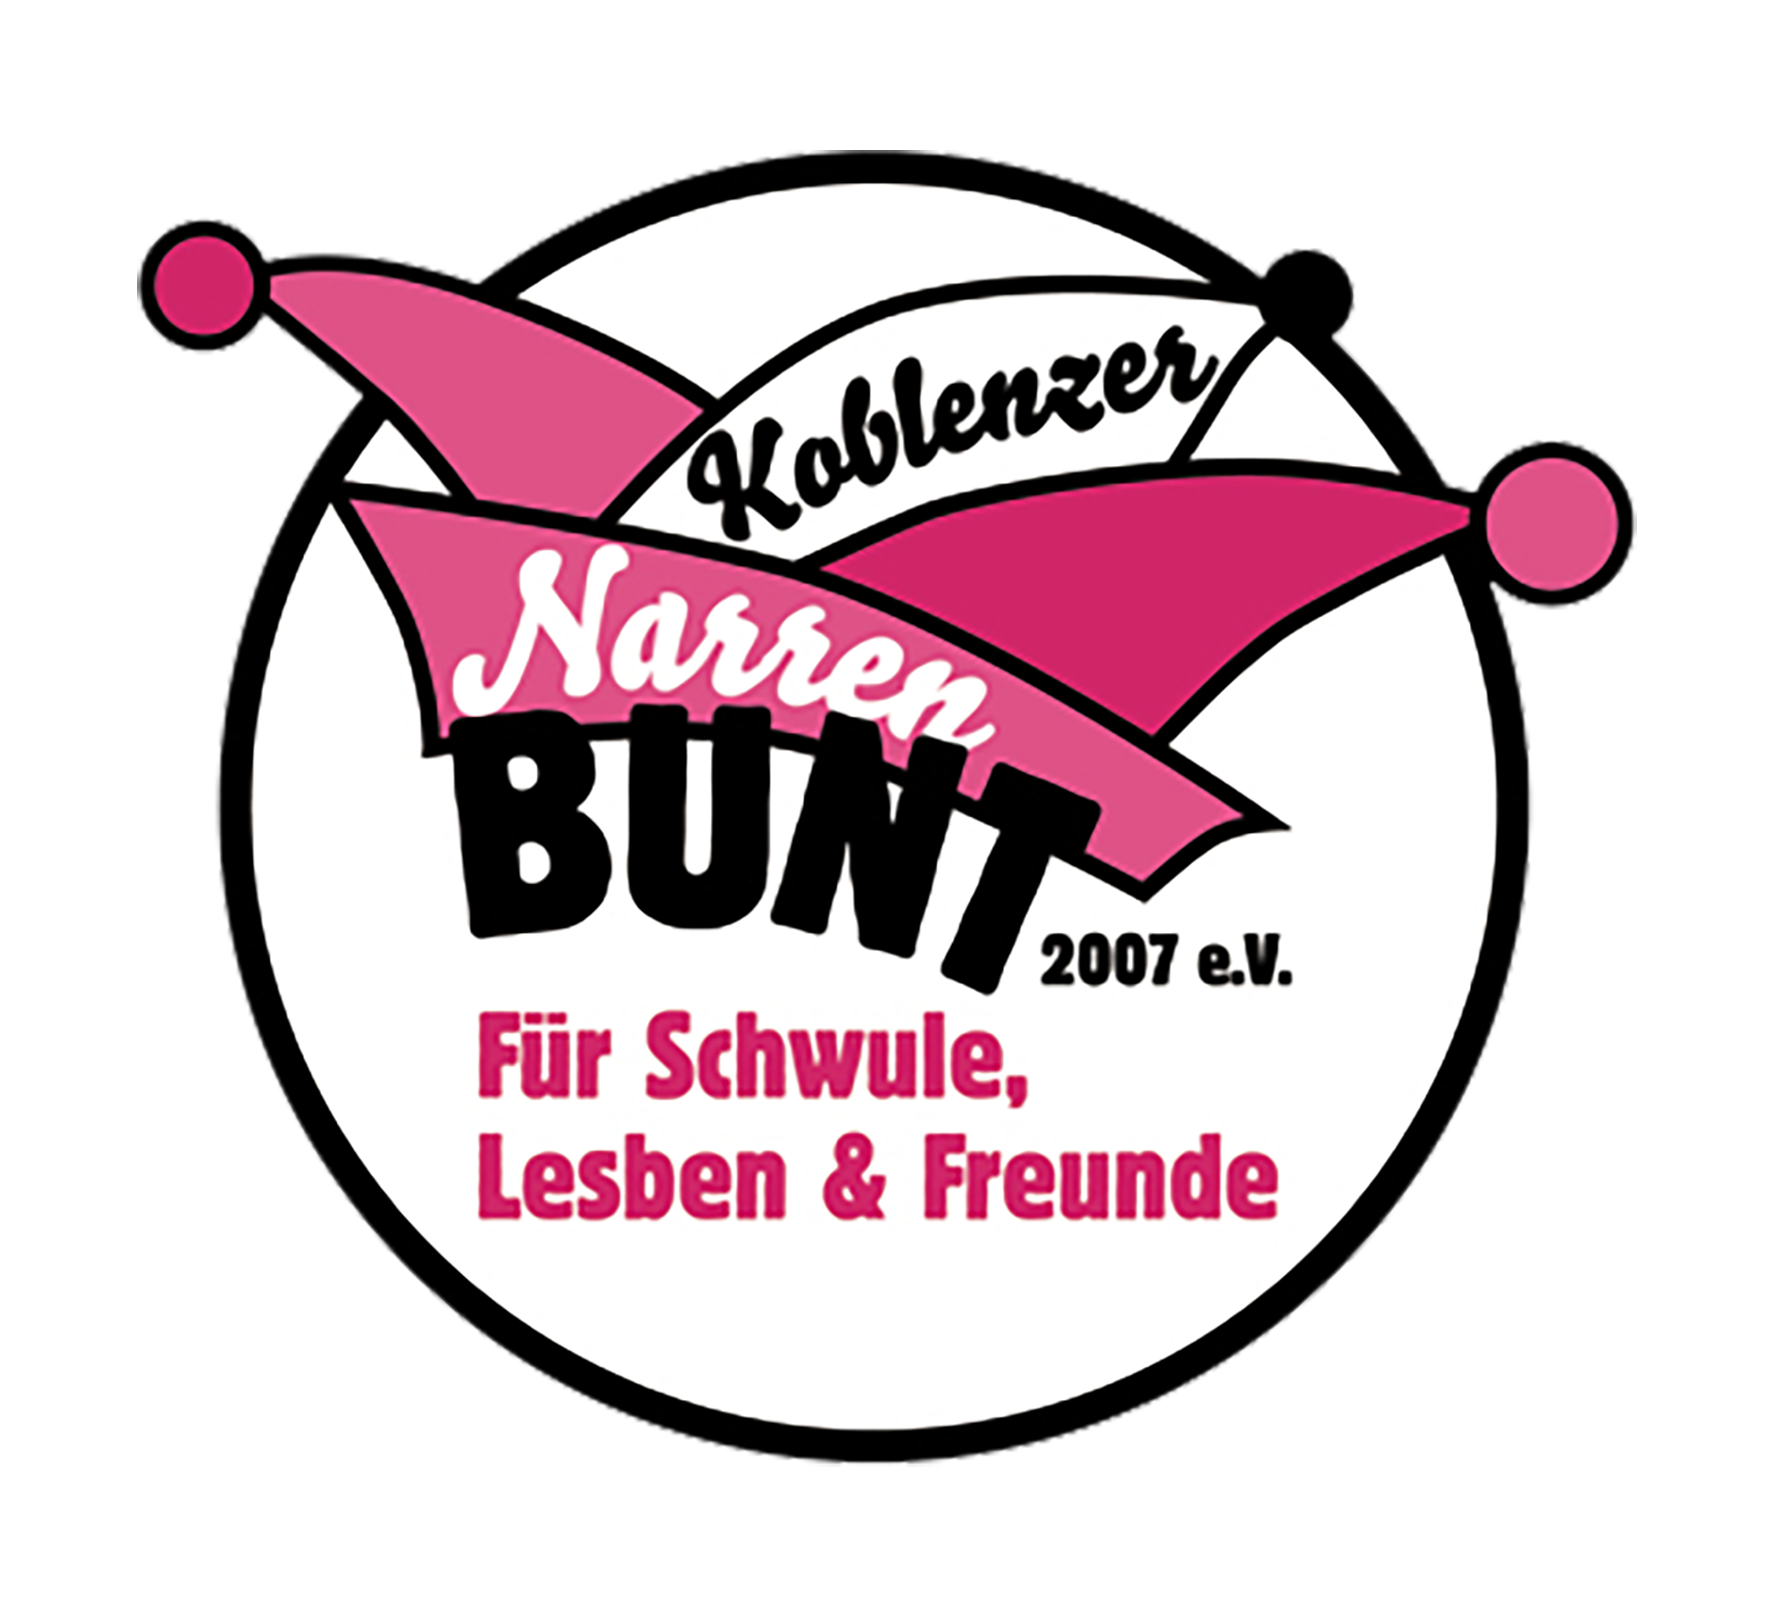 Koblenzer Narrenbunt 2007 e.V.